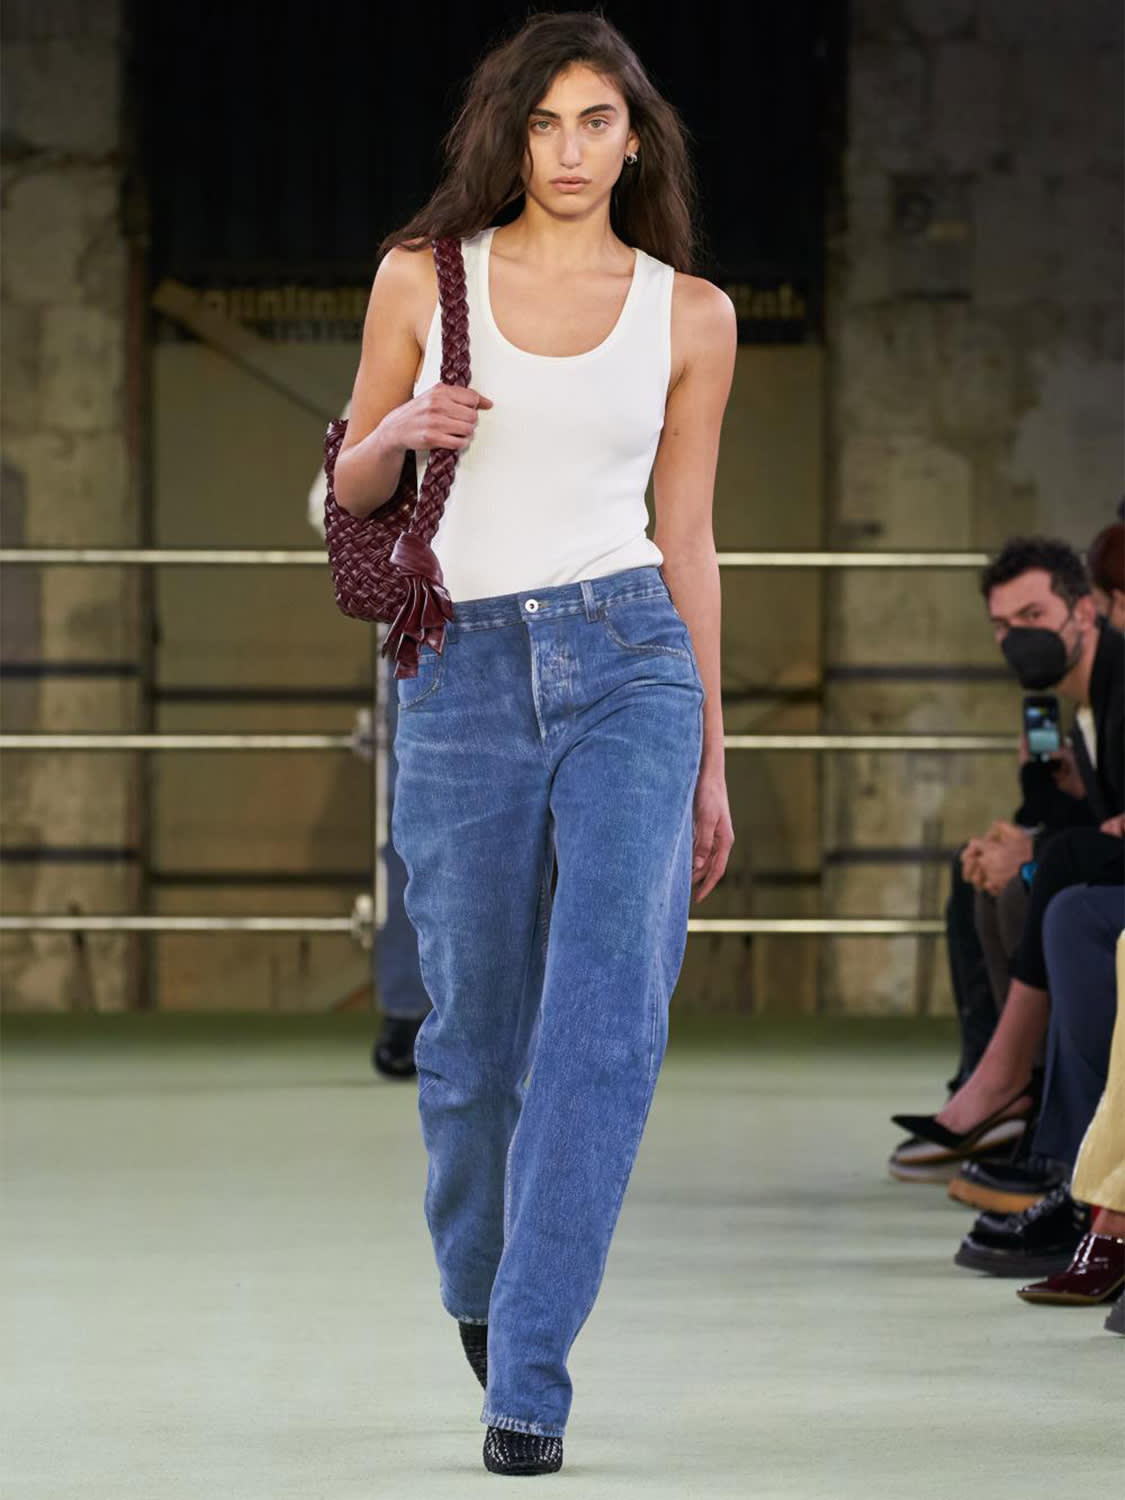 Milan Fashion Week highlights: Prada’s tank tops, Versace’s corsets ...